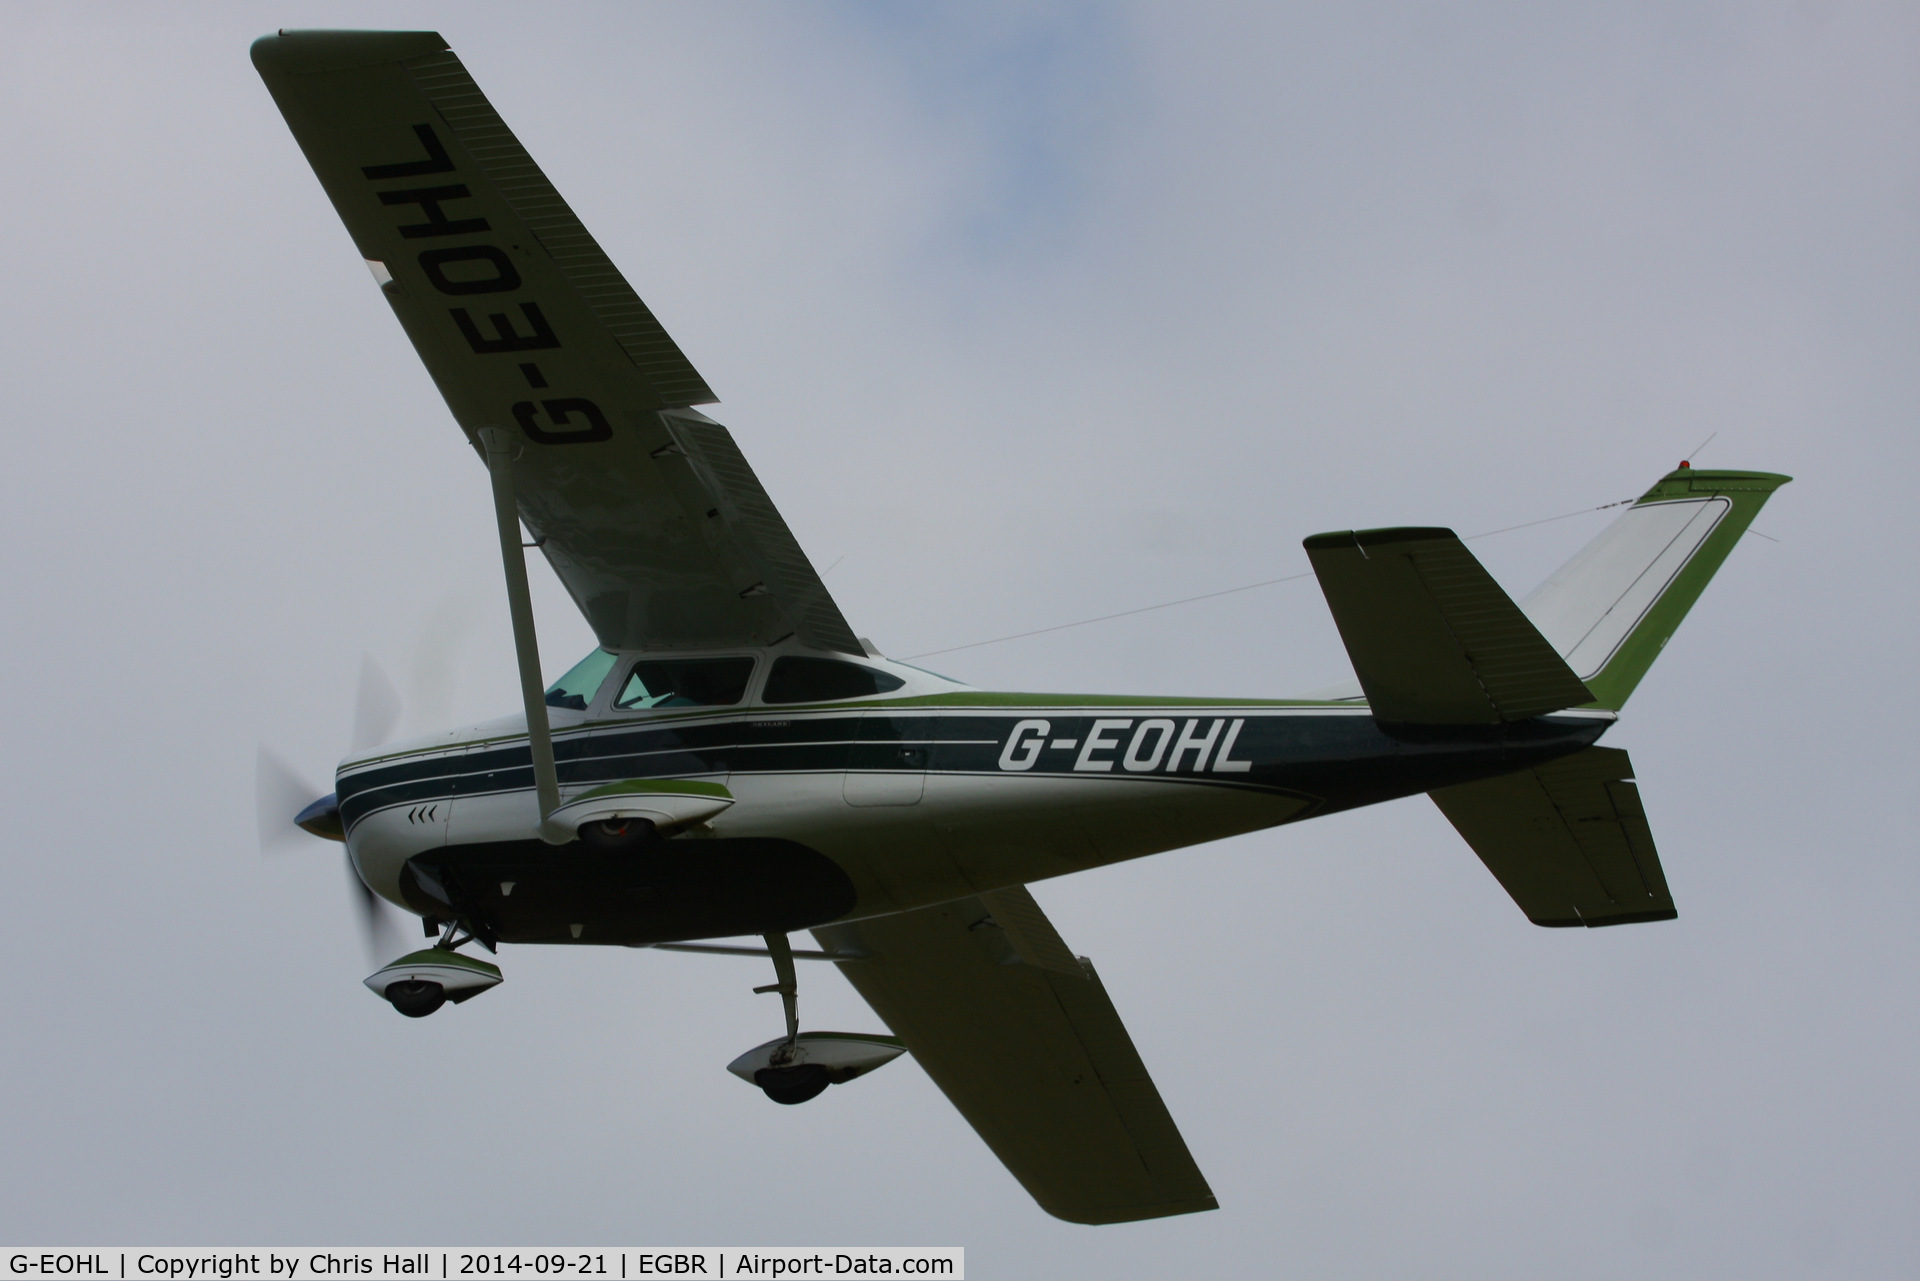 G-EOHL, 1968 Cessna 182L Skylane C/N 182-59279, at Breighton's Heli Fly-in, 2014